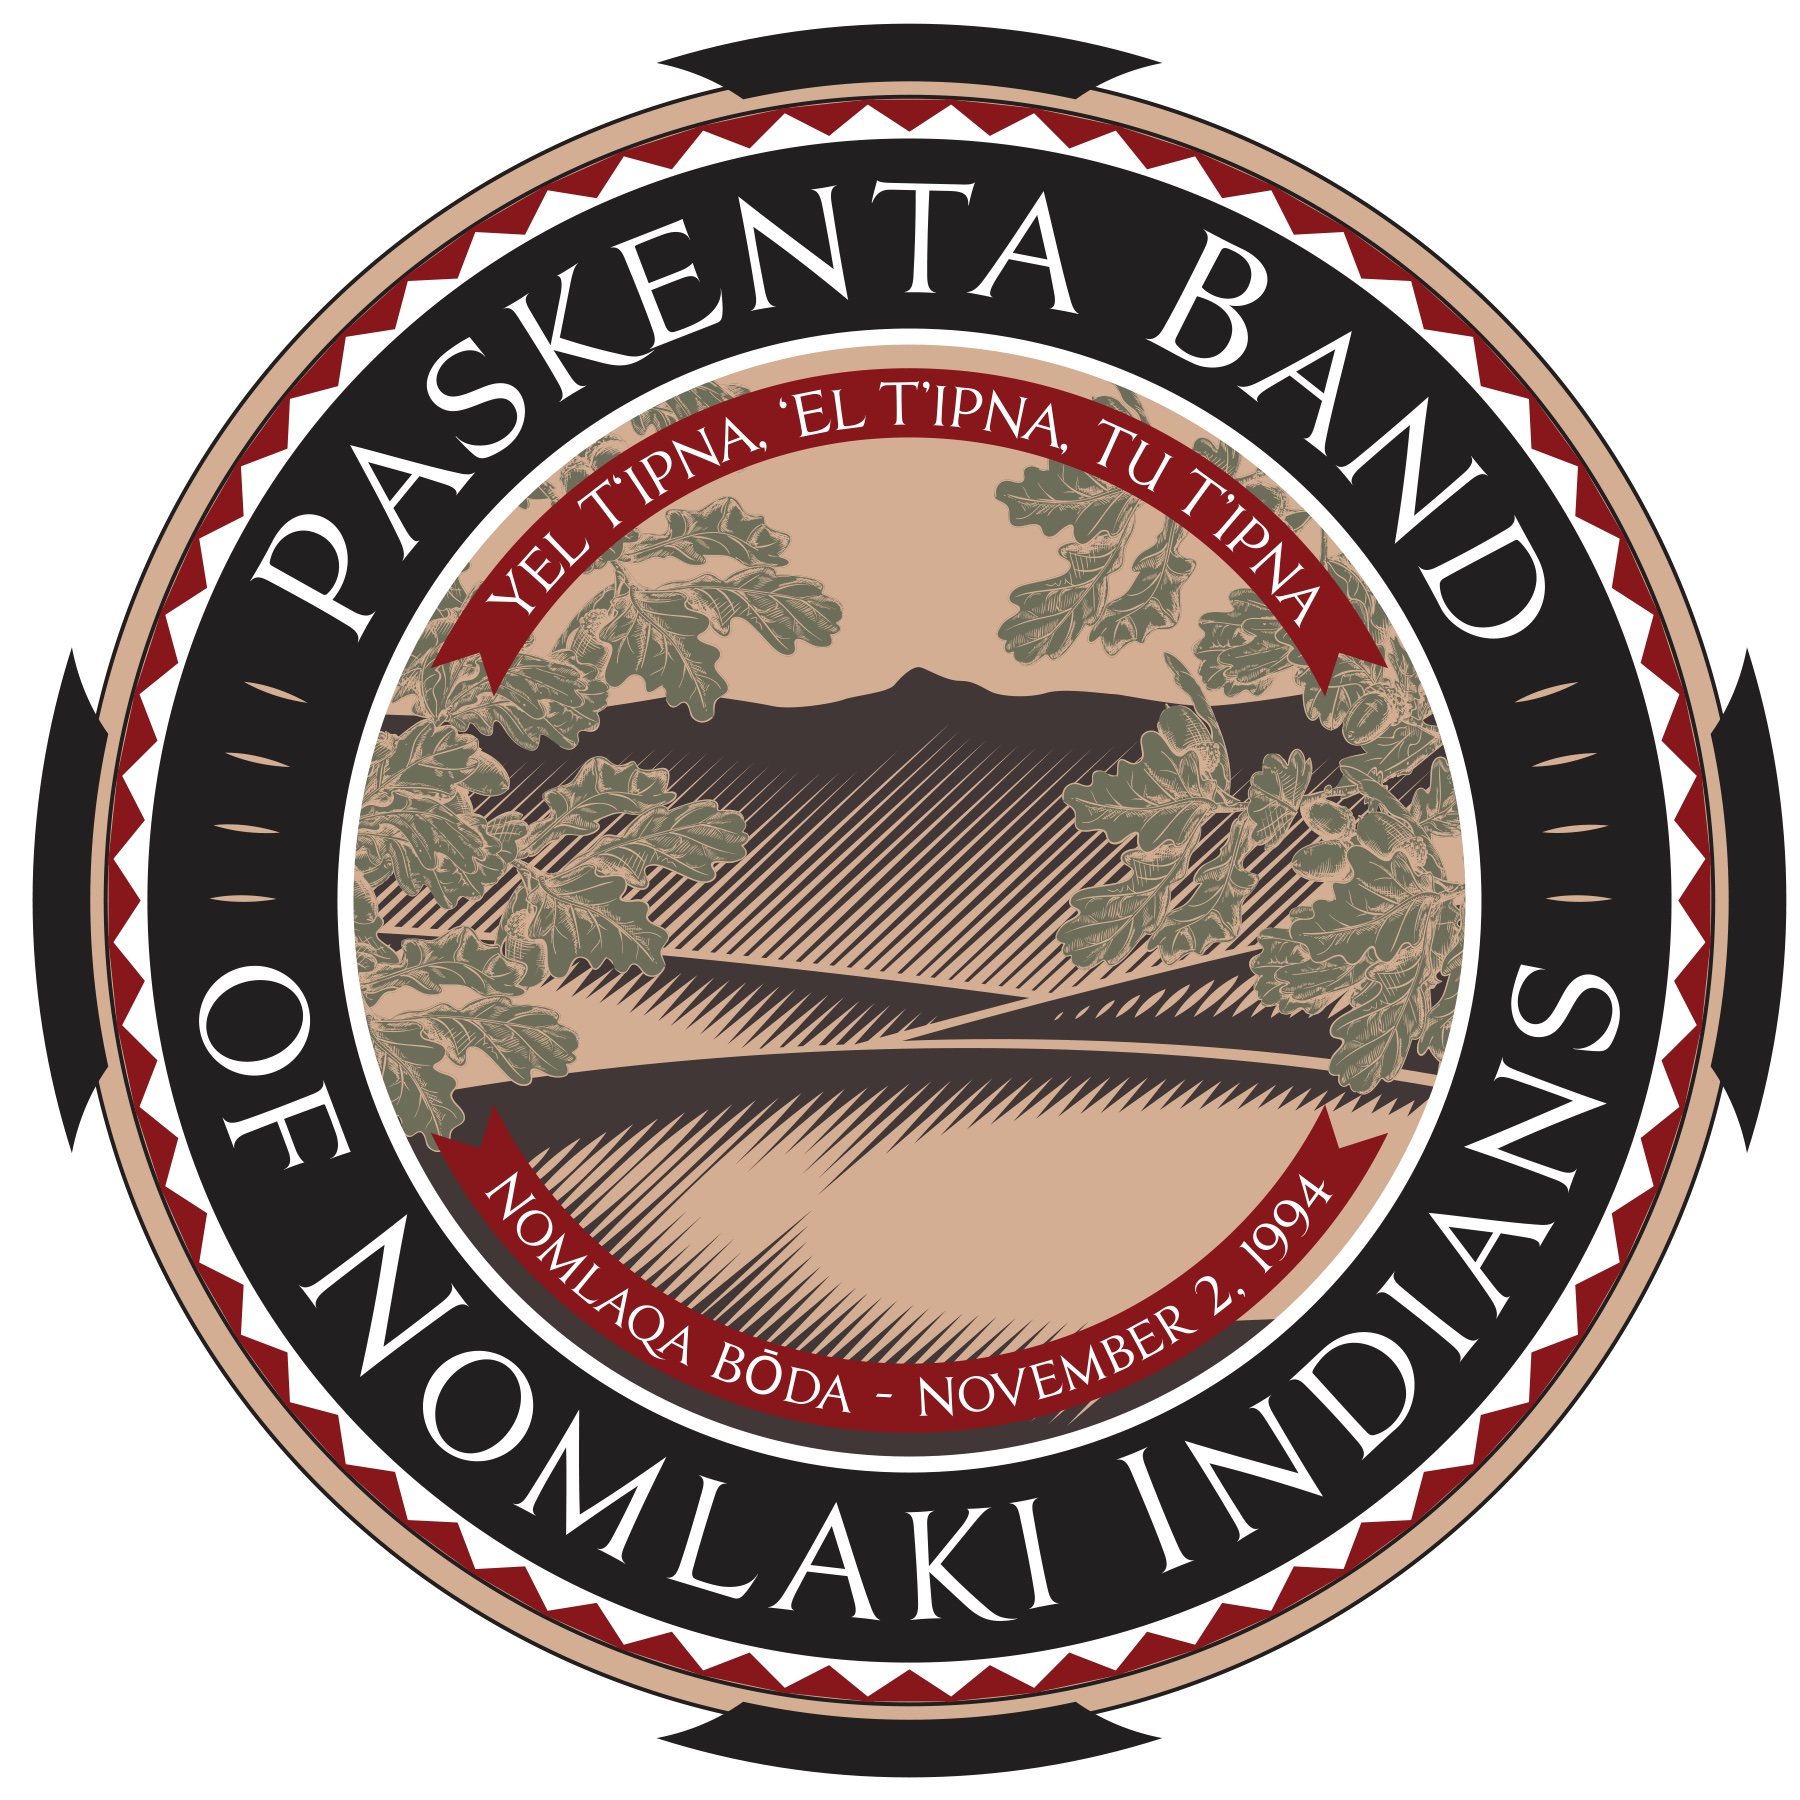 Paskenta Band of Nomlaki Indians logo